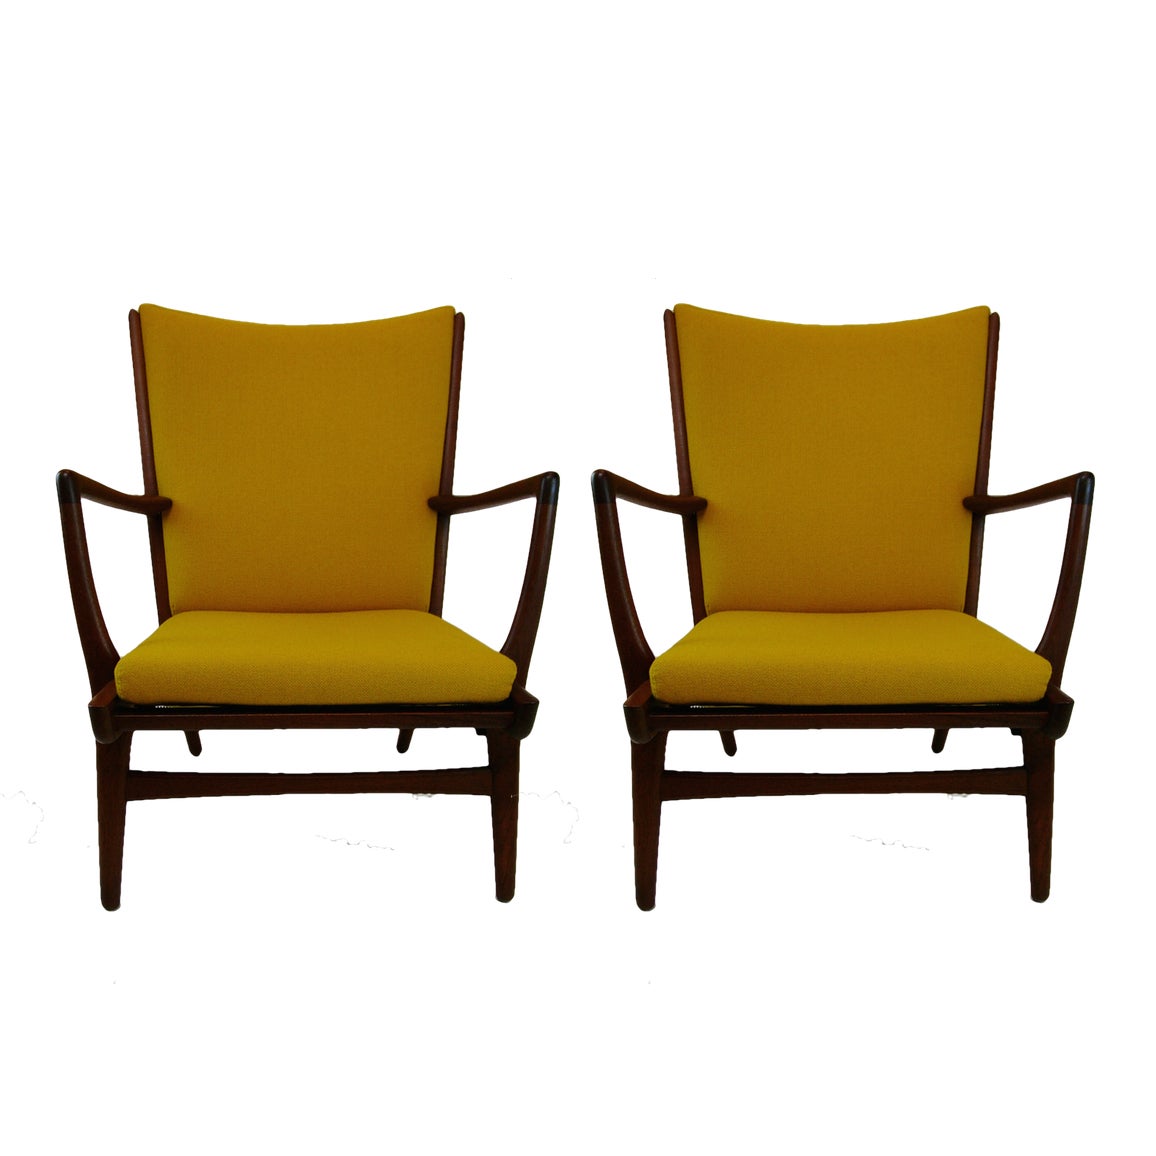 A sculptural pair of Hans Wegner AP16 armchairs in beautiful original condition.